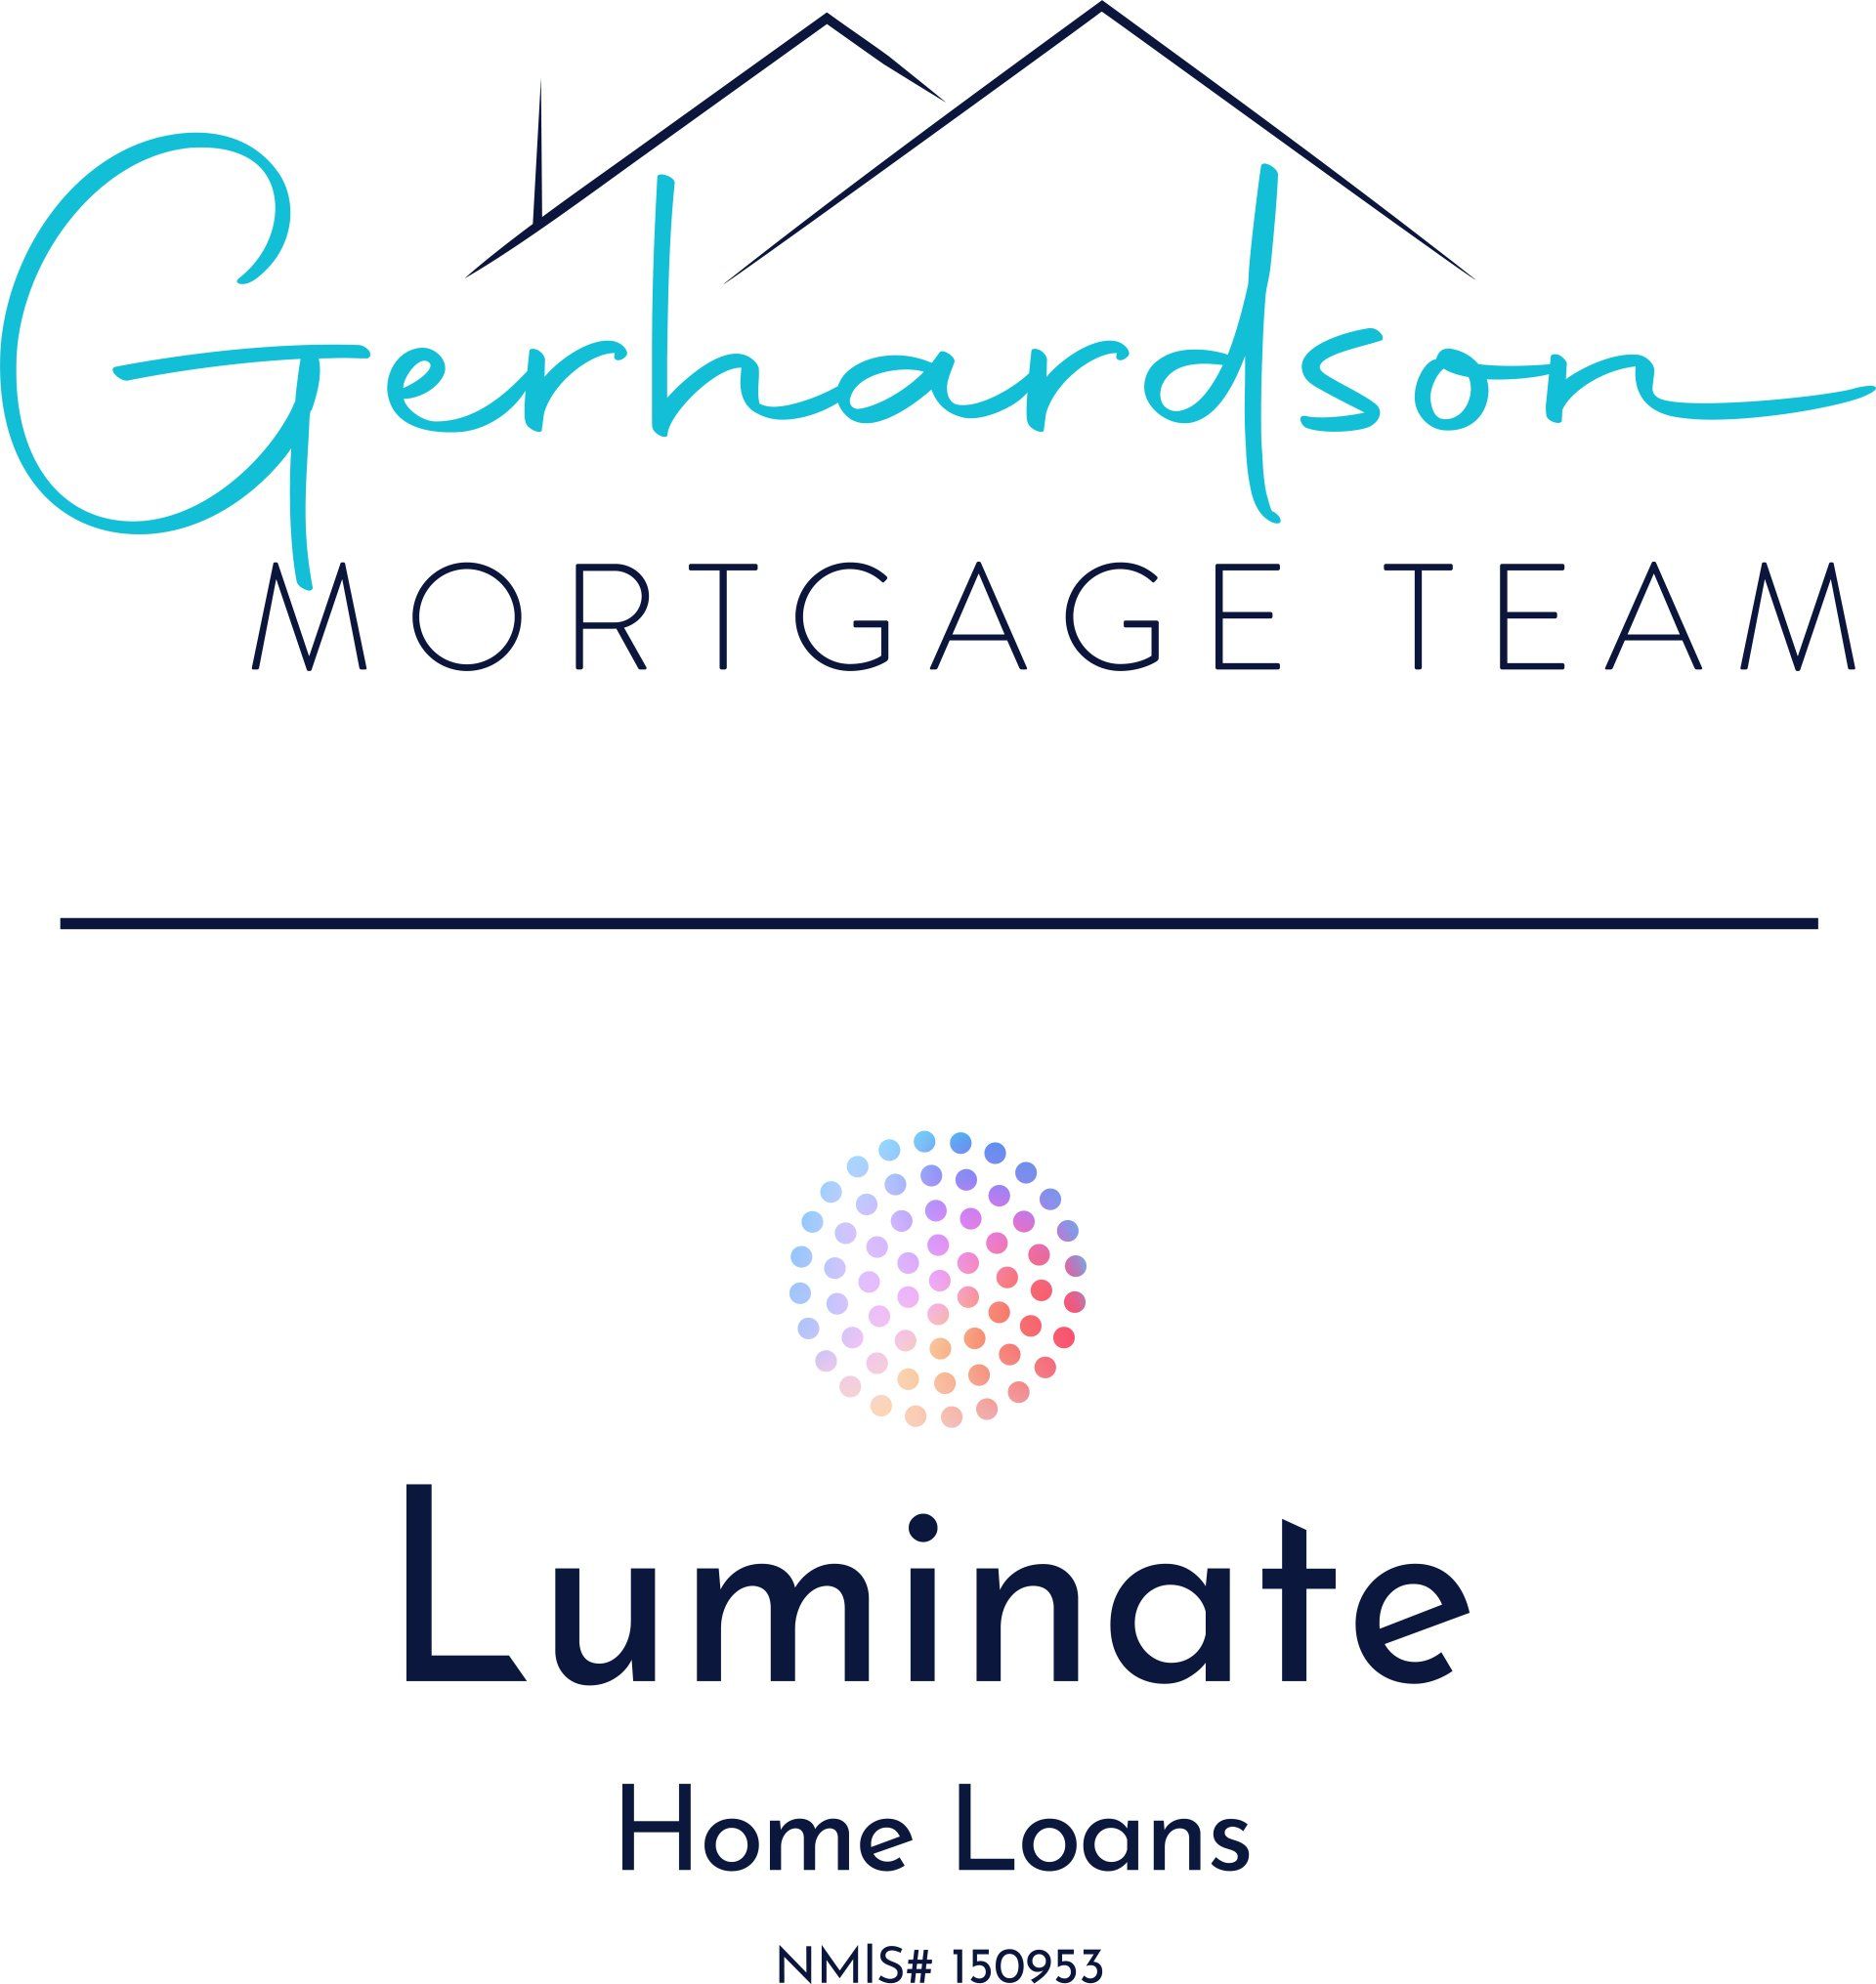 Gerhardson Mortgage Team and Luminate logo vertical